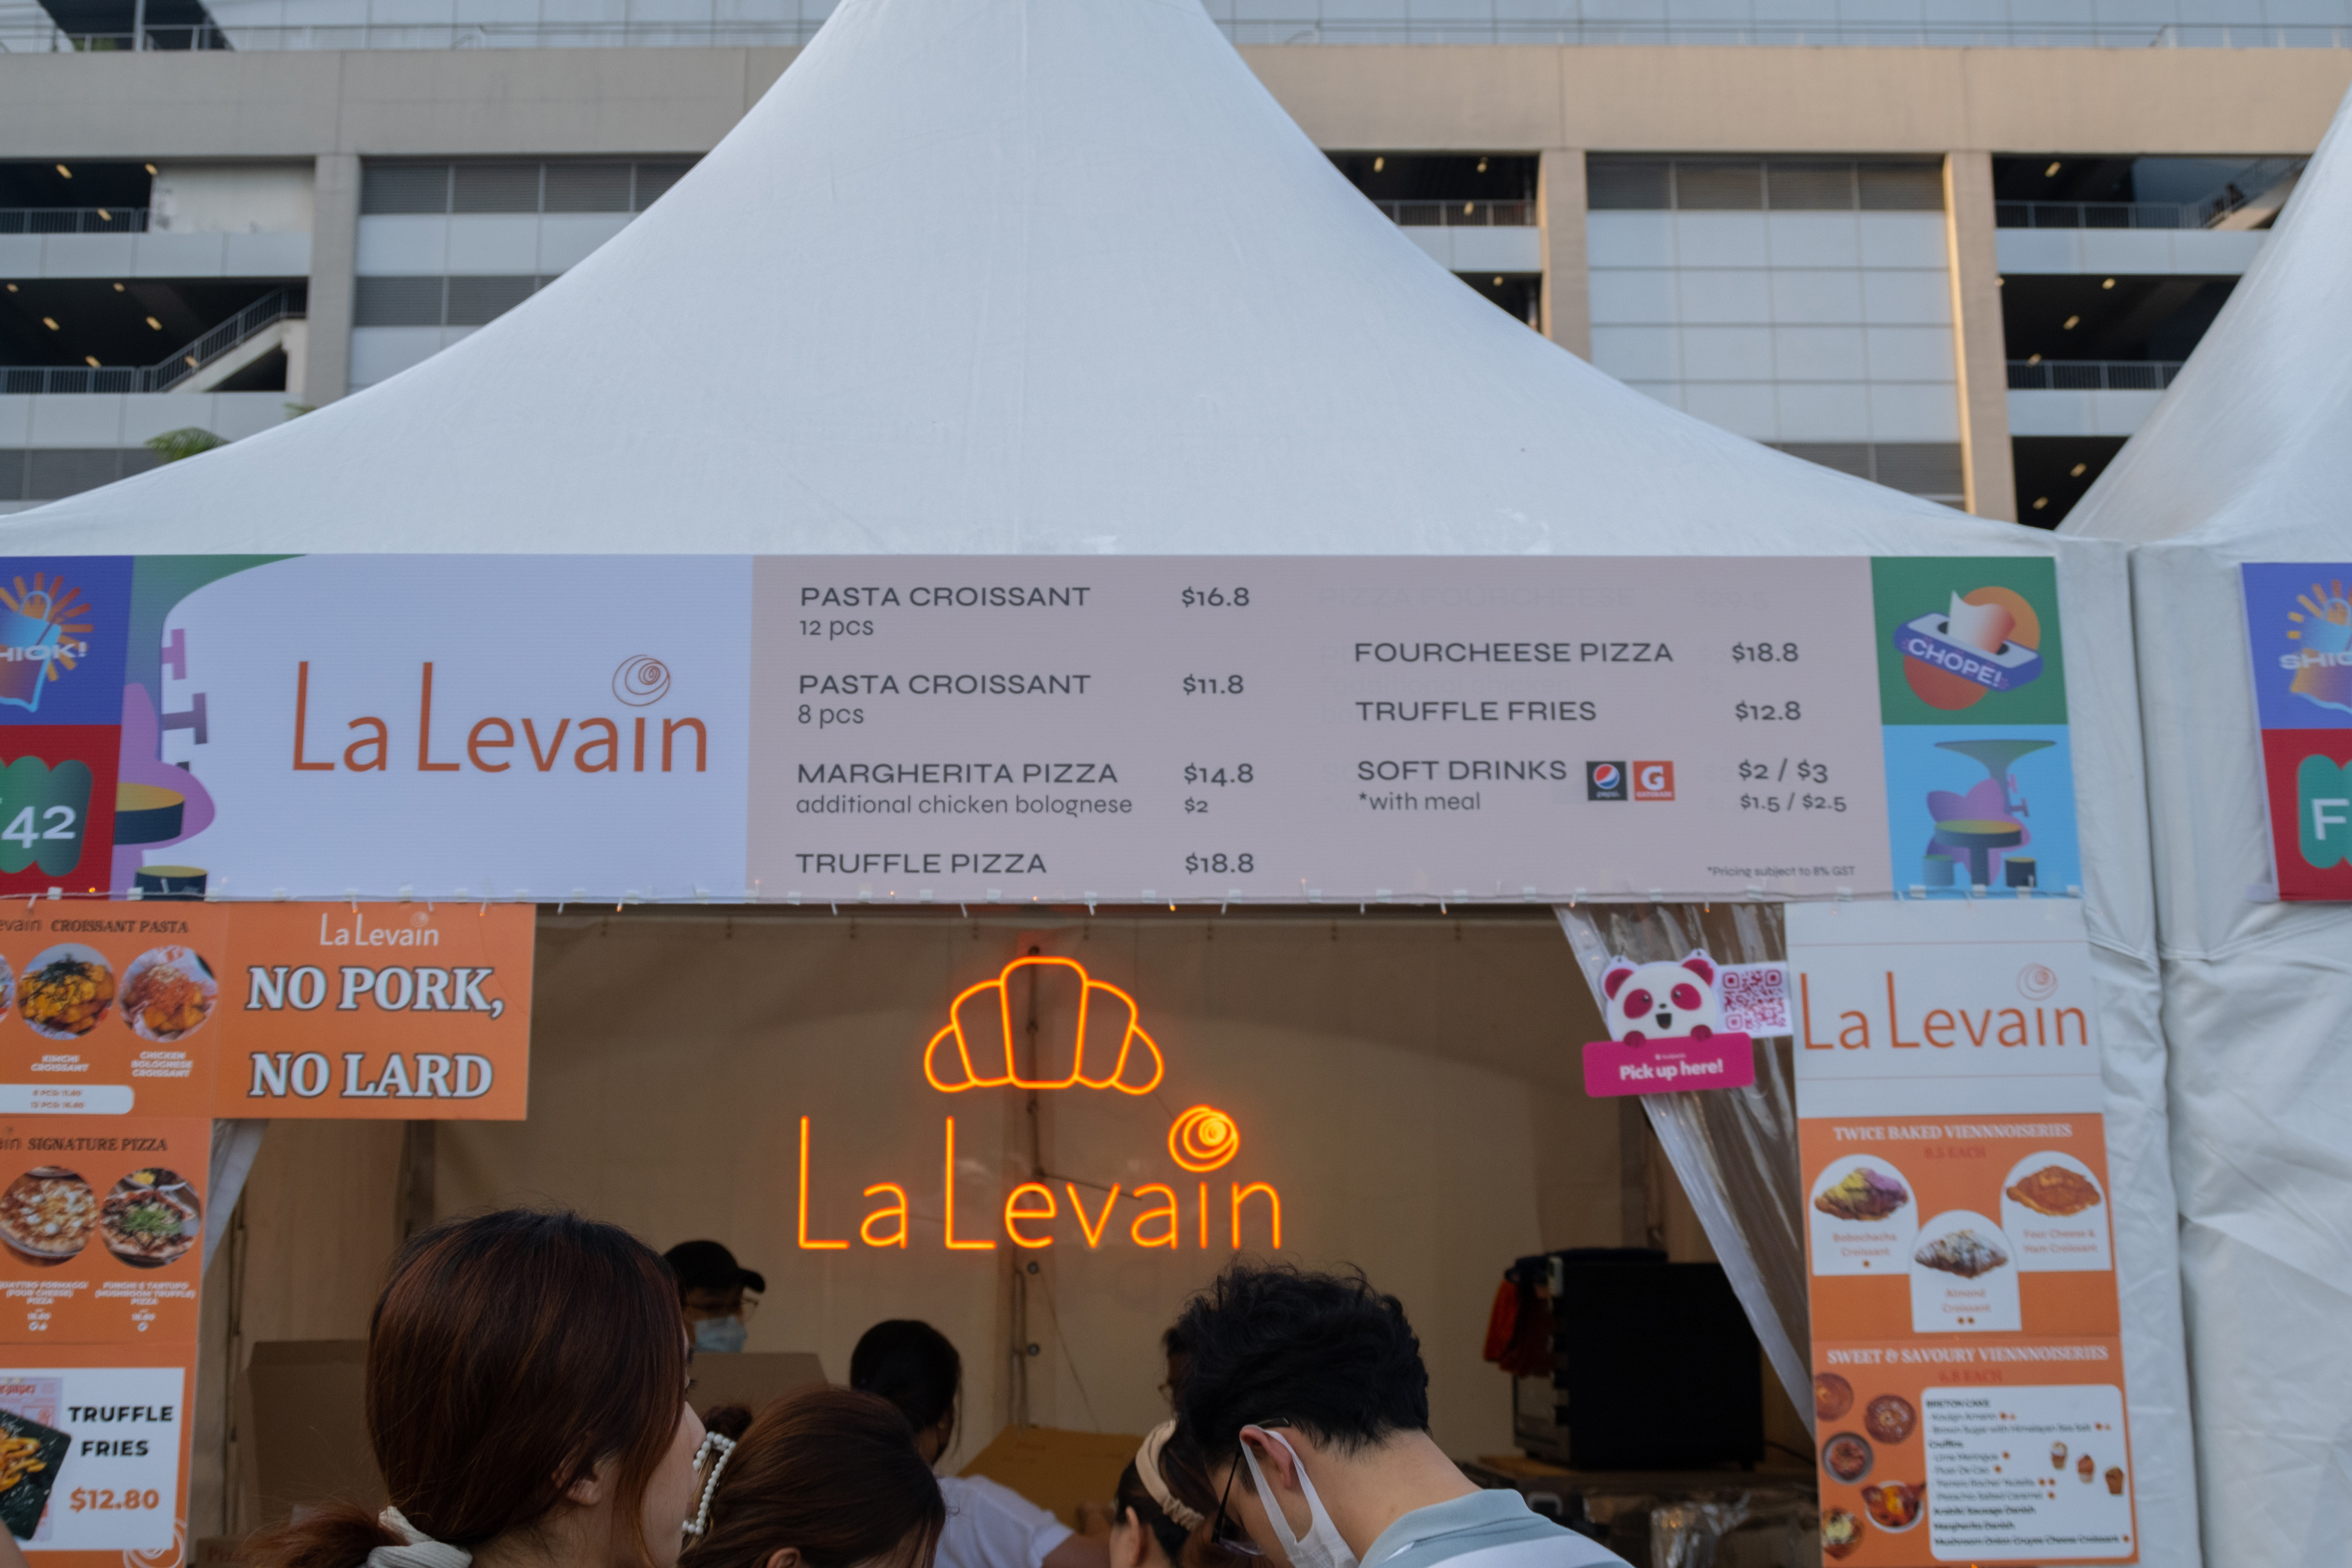 La Levain’s storefront, featuring their menu items.